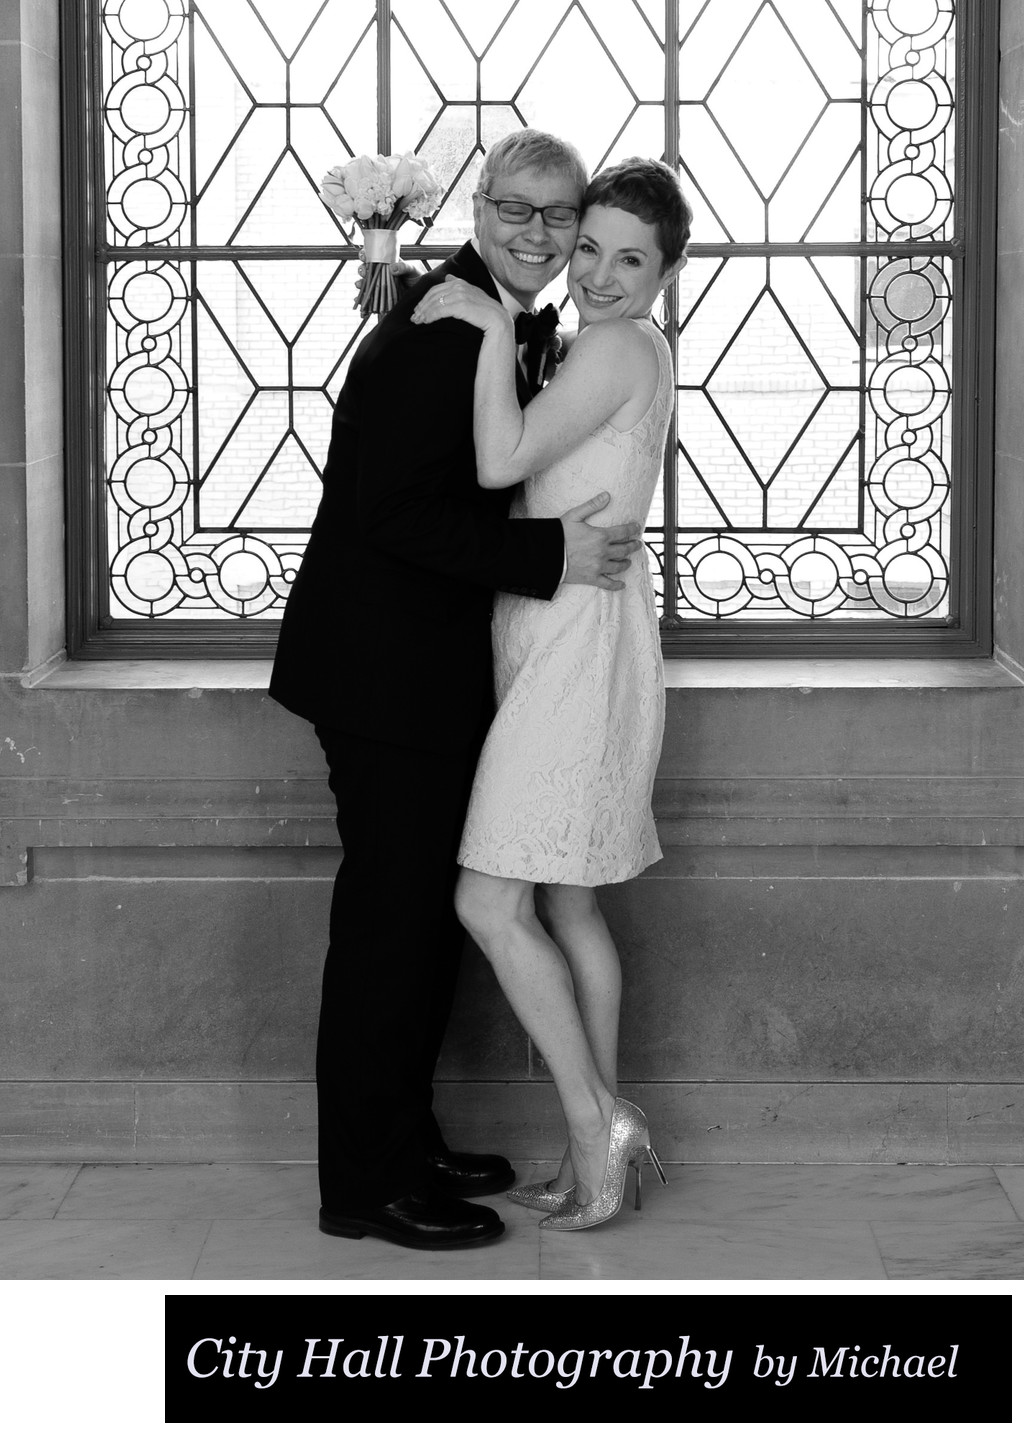 City Hall Lesbian Wedding Photography Window Image